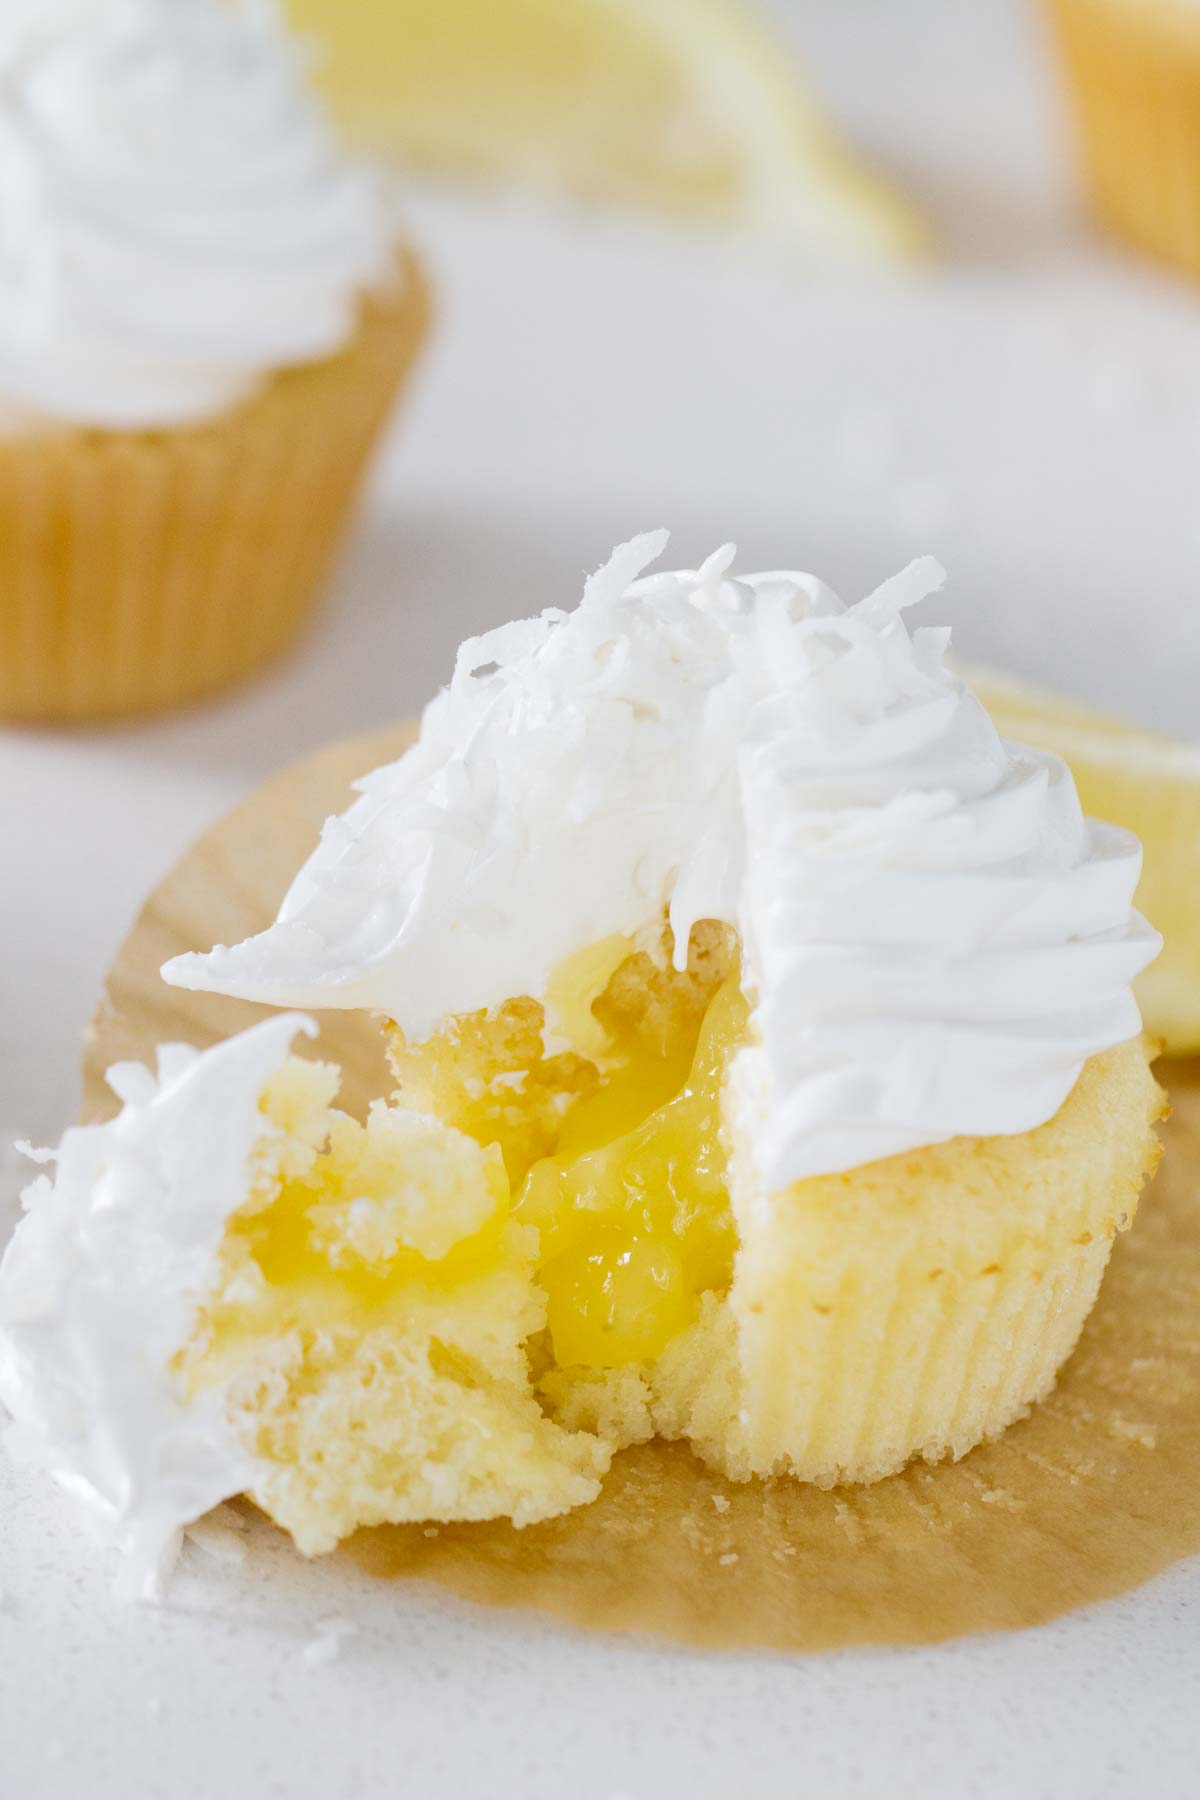 Lemon sunshine cupcake cut open to show the lemon filling in the center.